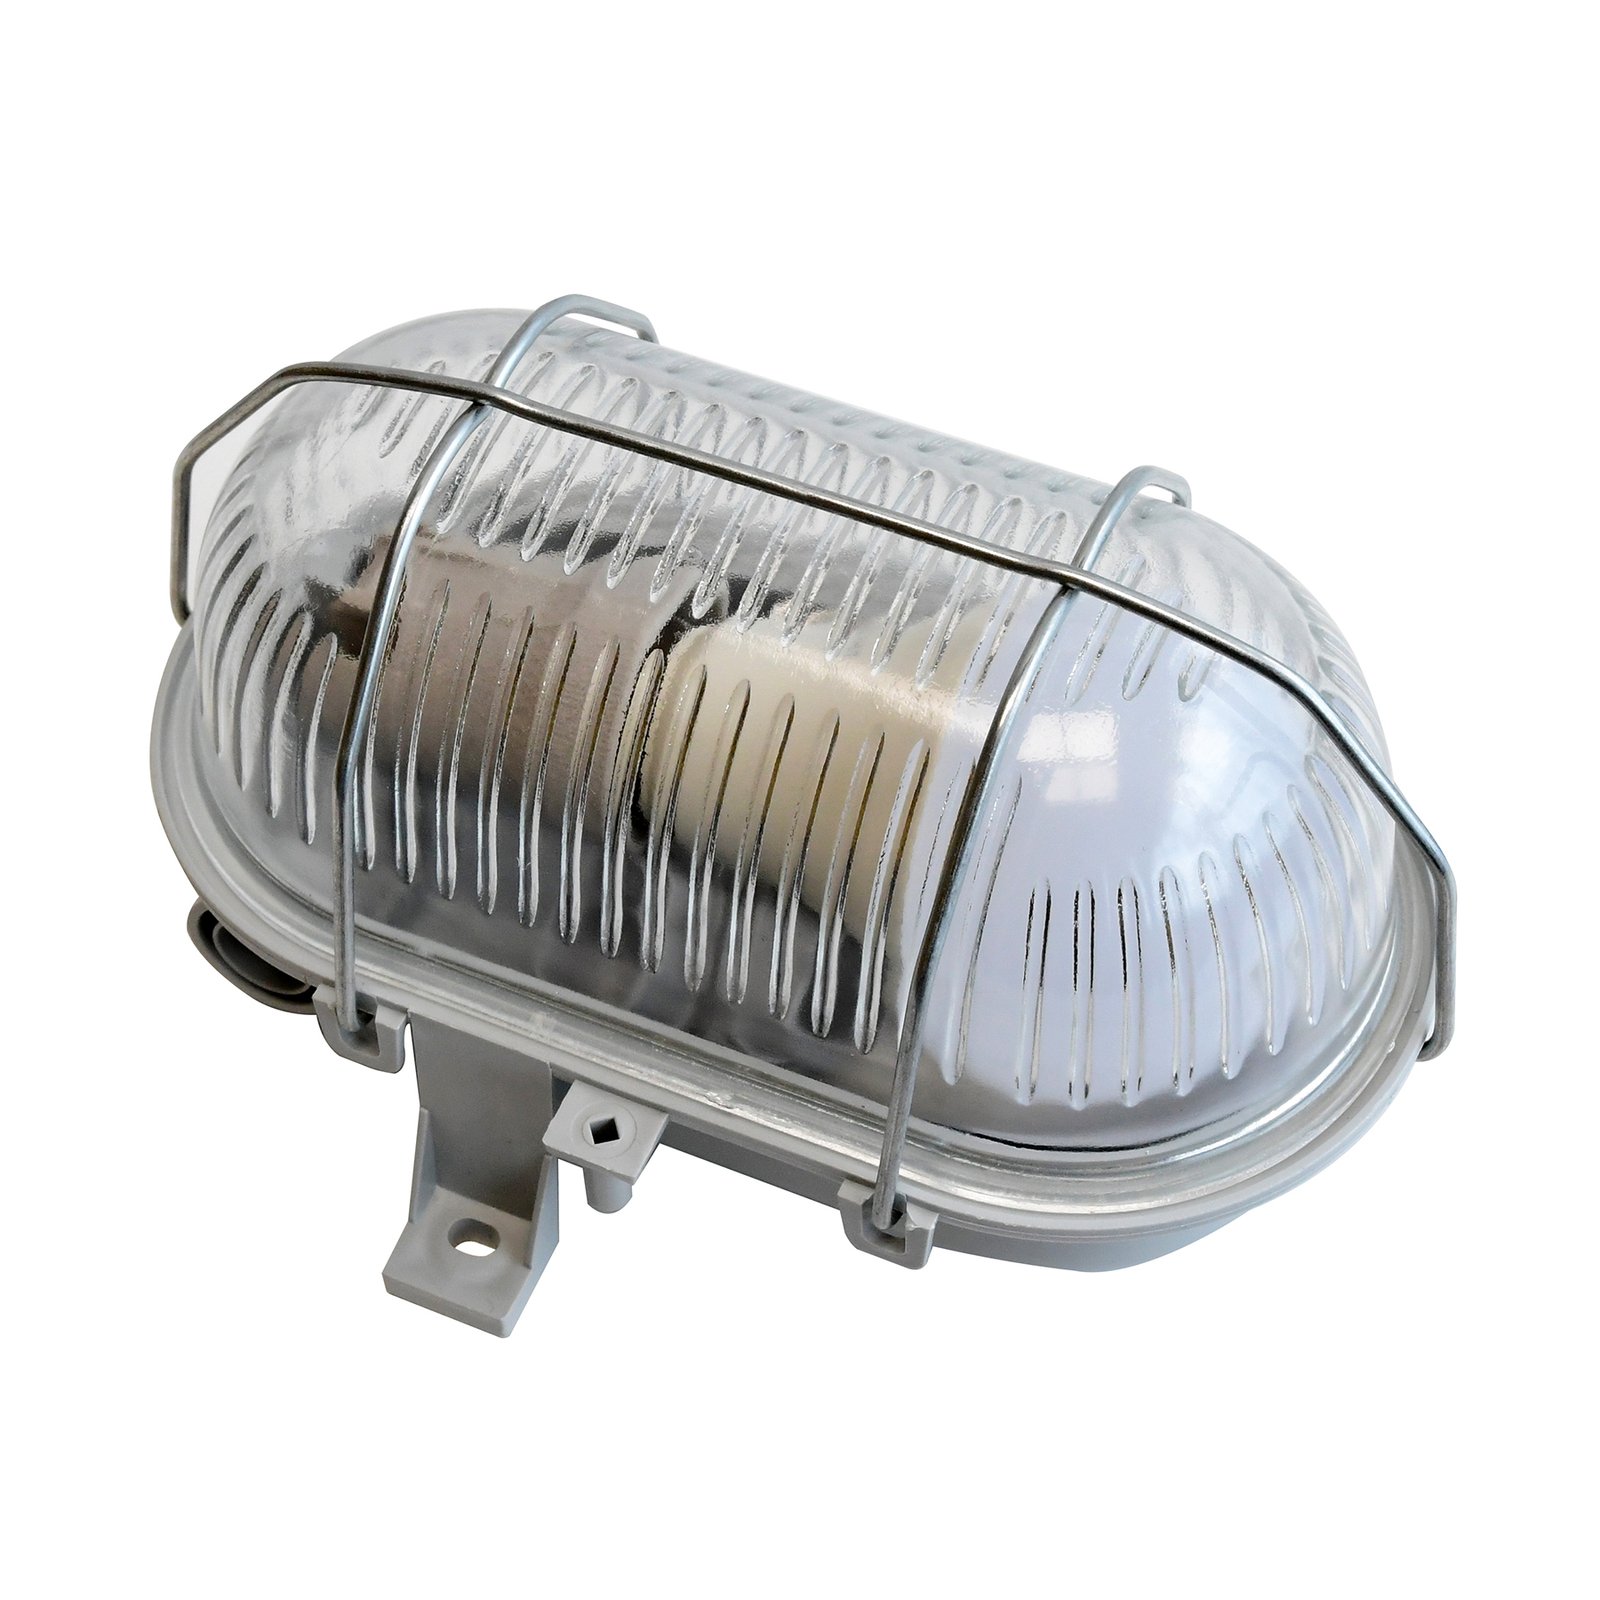 MEGAMAN E27 7W LED-Lampe A60 810 lm 4.000 K opal